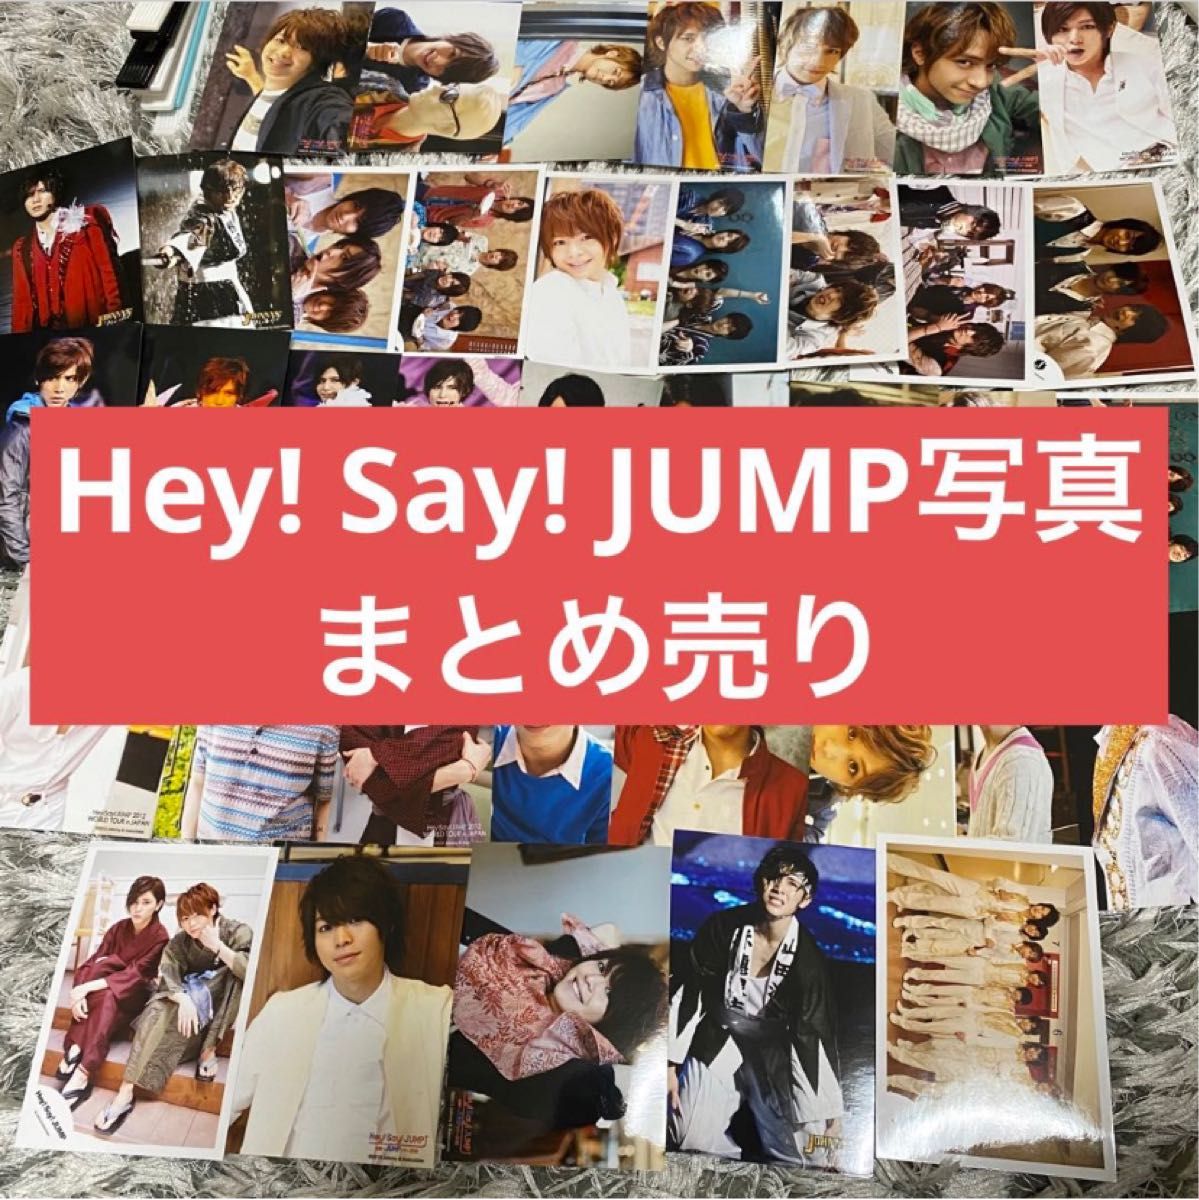 Hey! Say! JUMP 公式写真 山田涼介 伊野尾慧 中島裕翔 知念侑李 - 男性